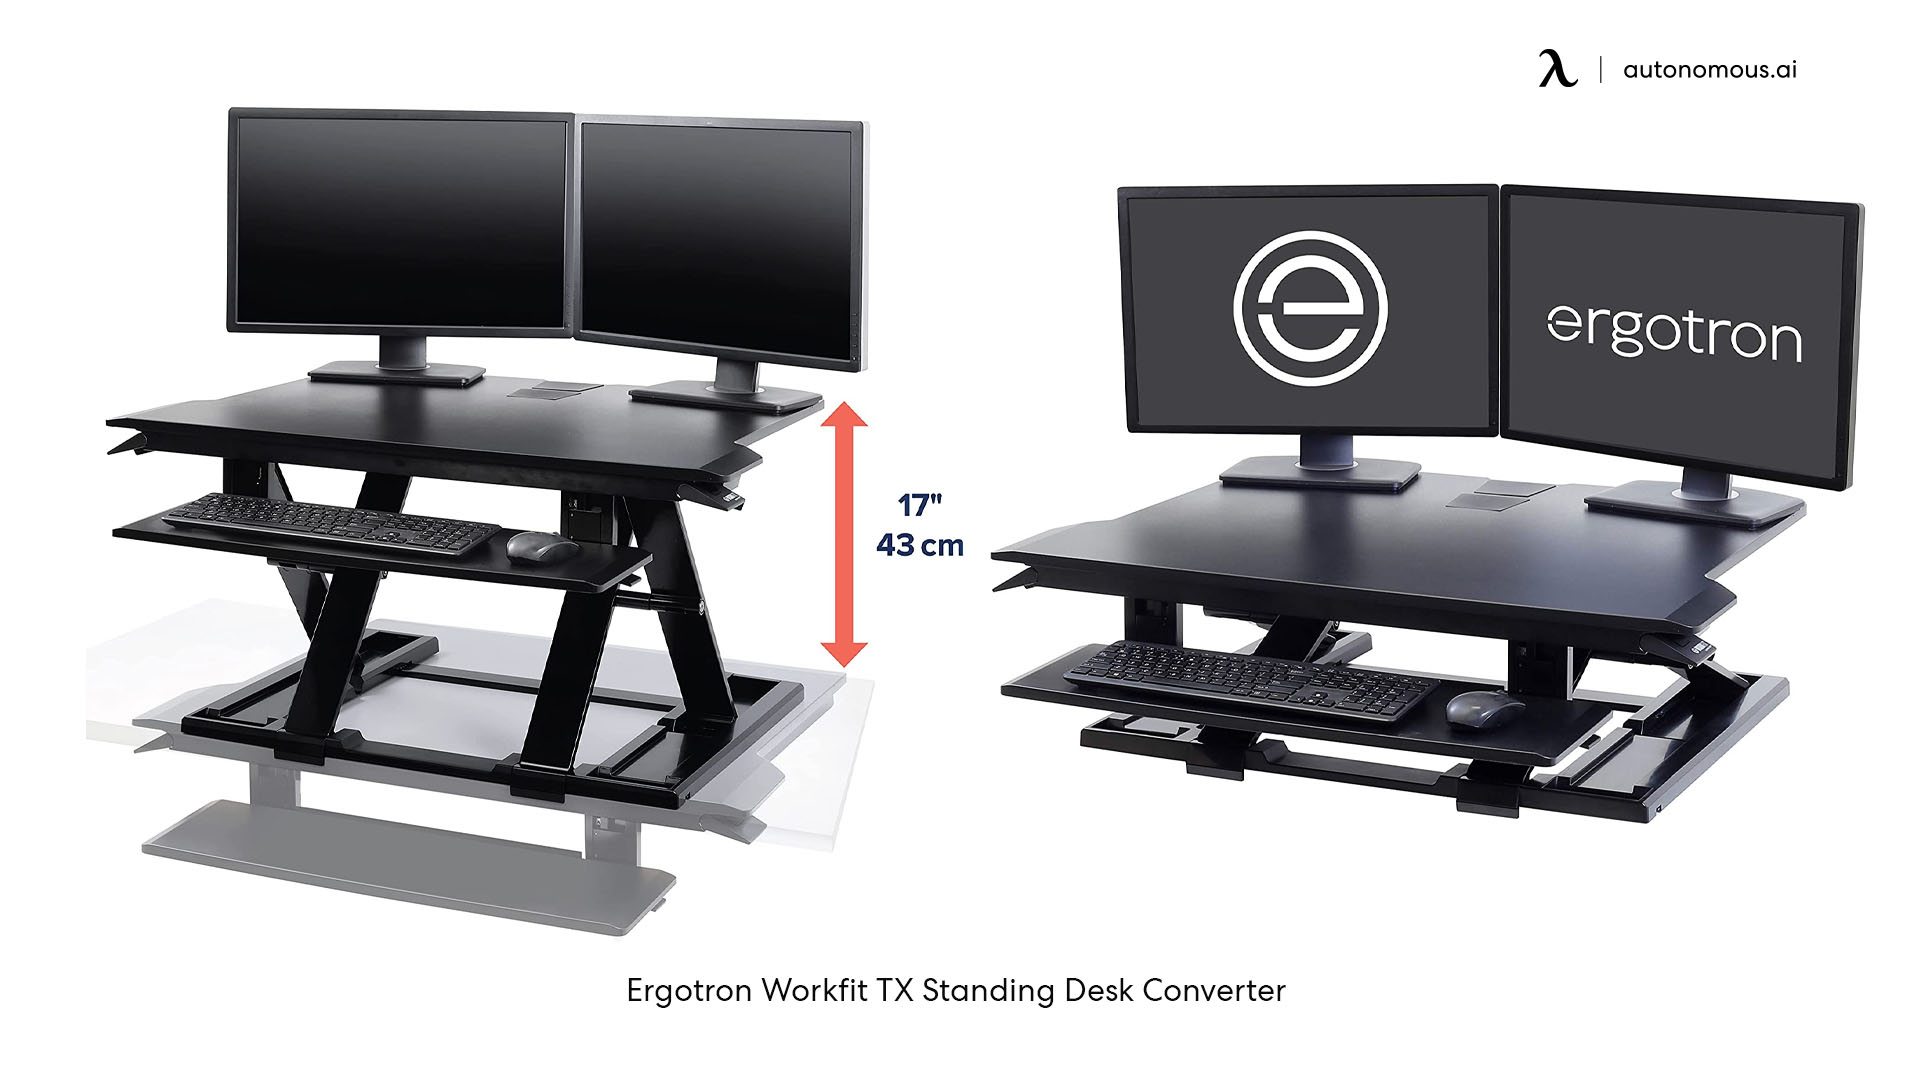 Ergotron Workfit TX Standing Desk Converter